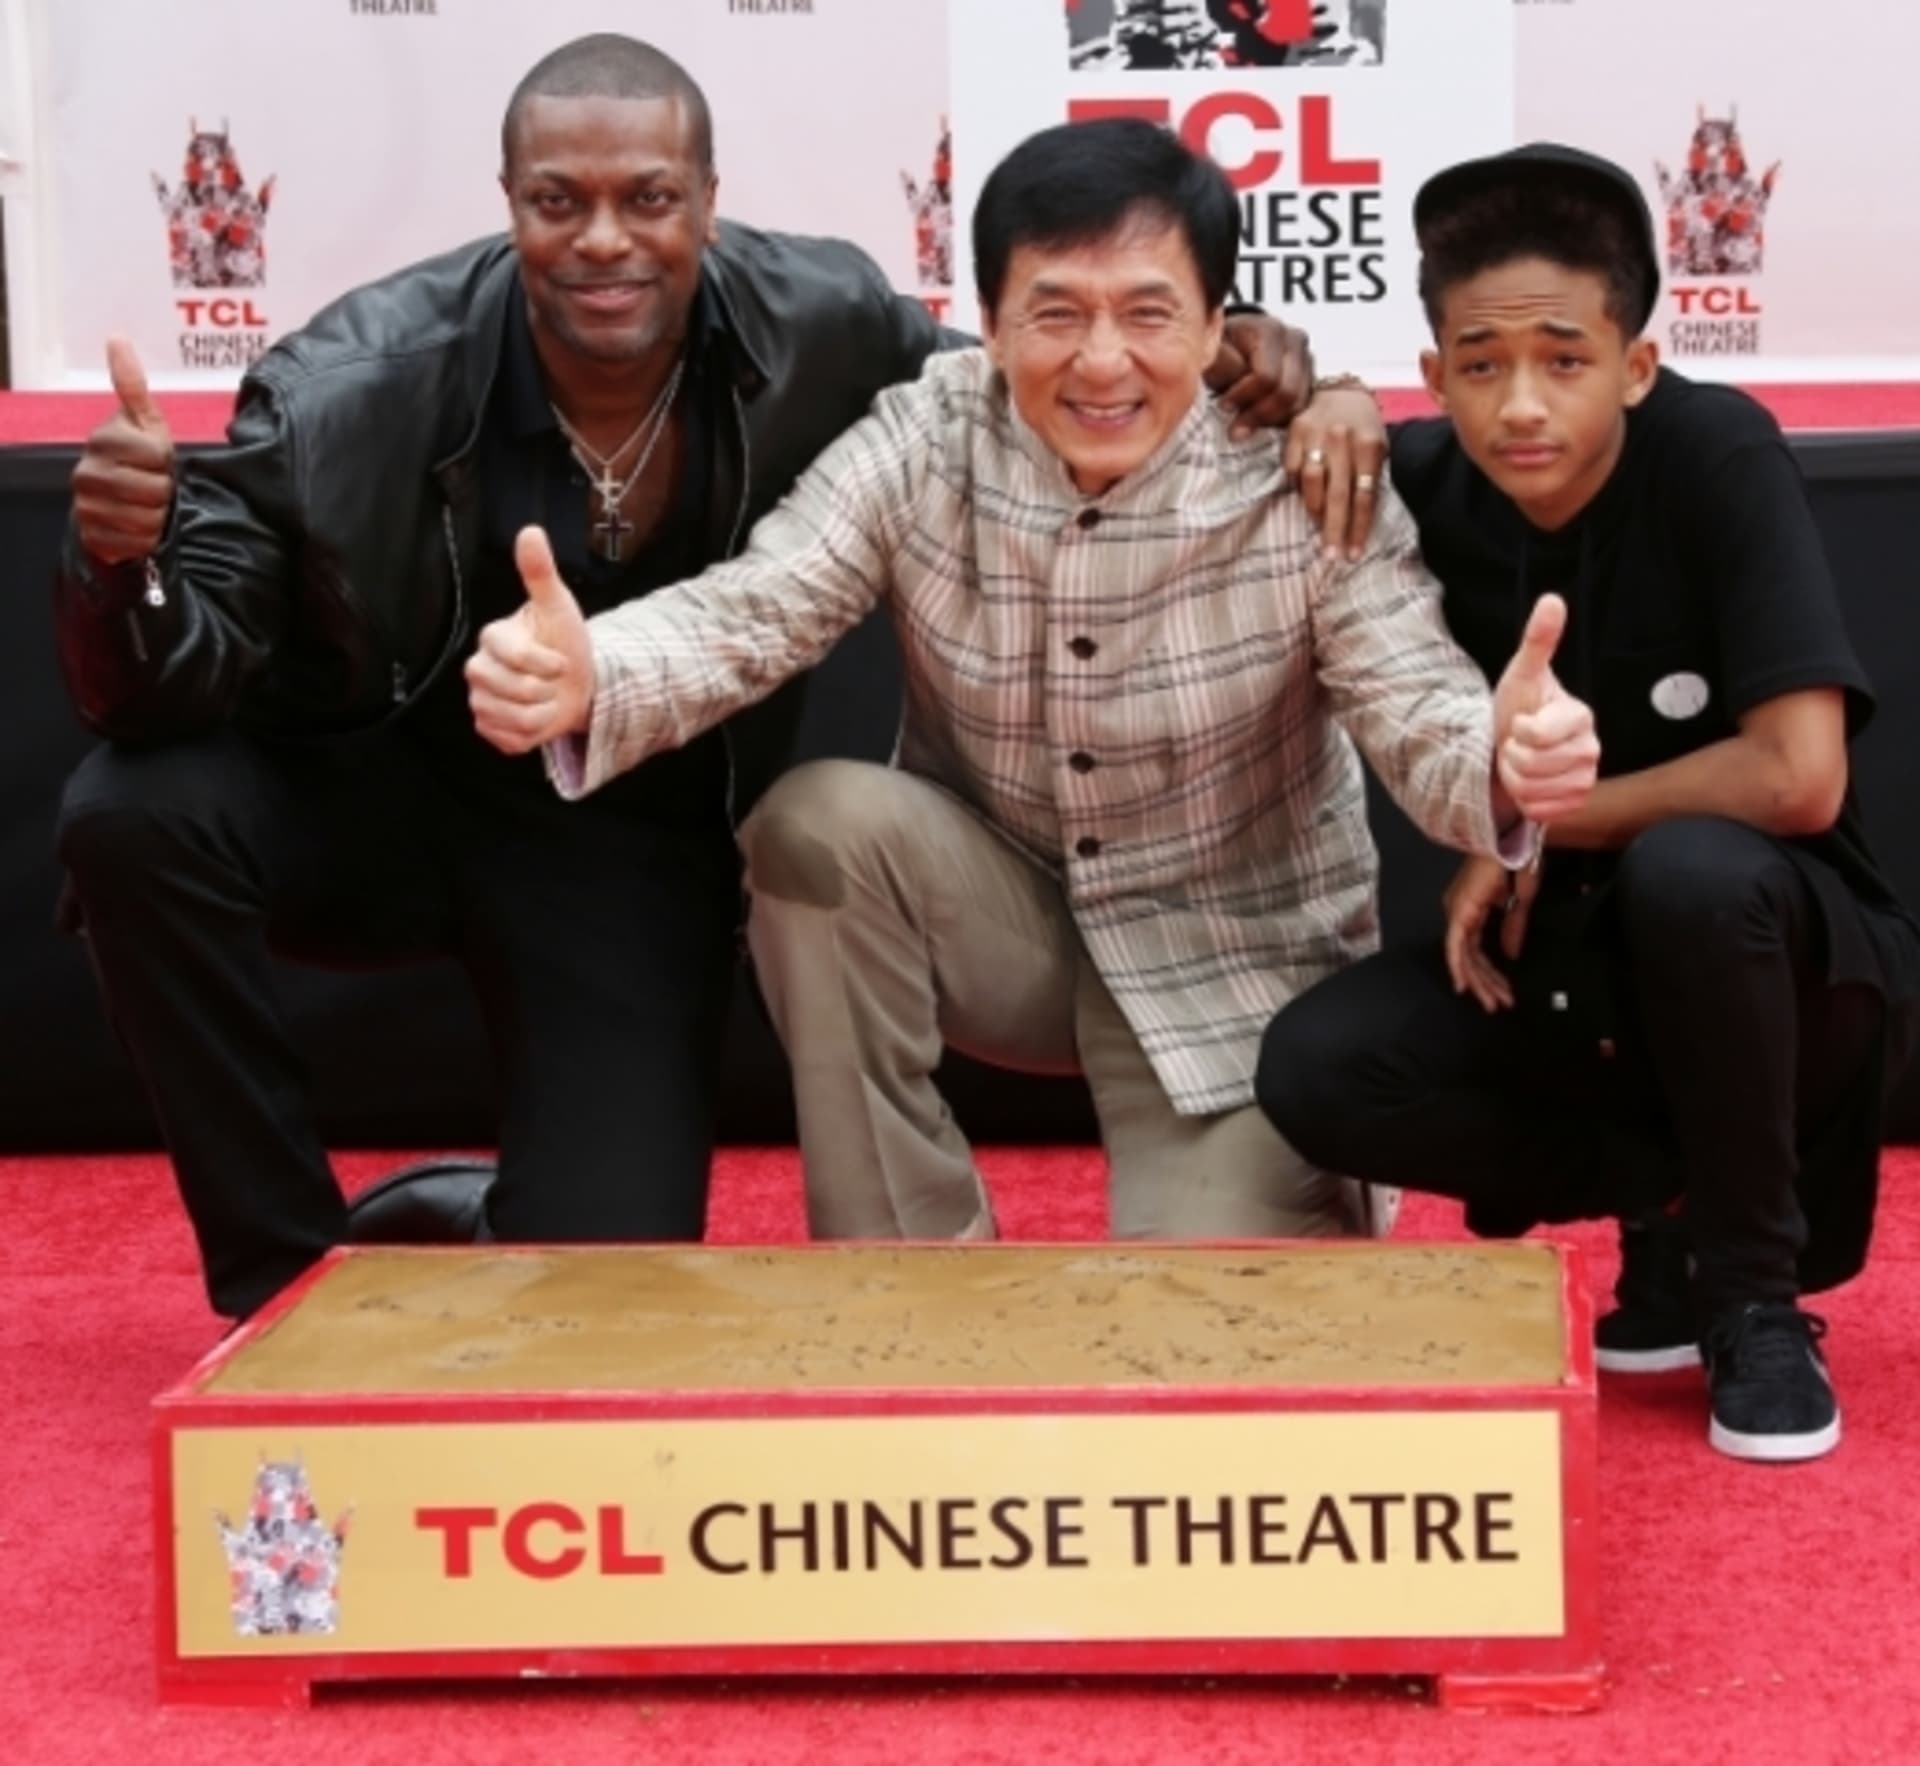 Kolega Jackie Chana Chris Trucker (vlevo) a Jaden, syn herce Willa Smithe, kterého Chan trénuje